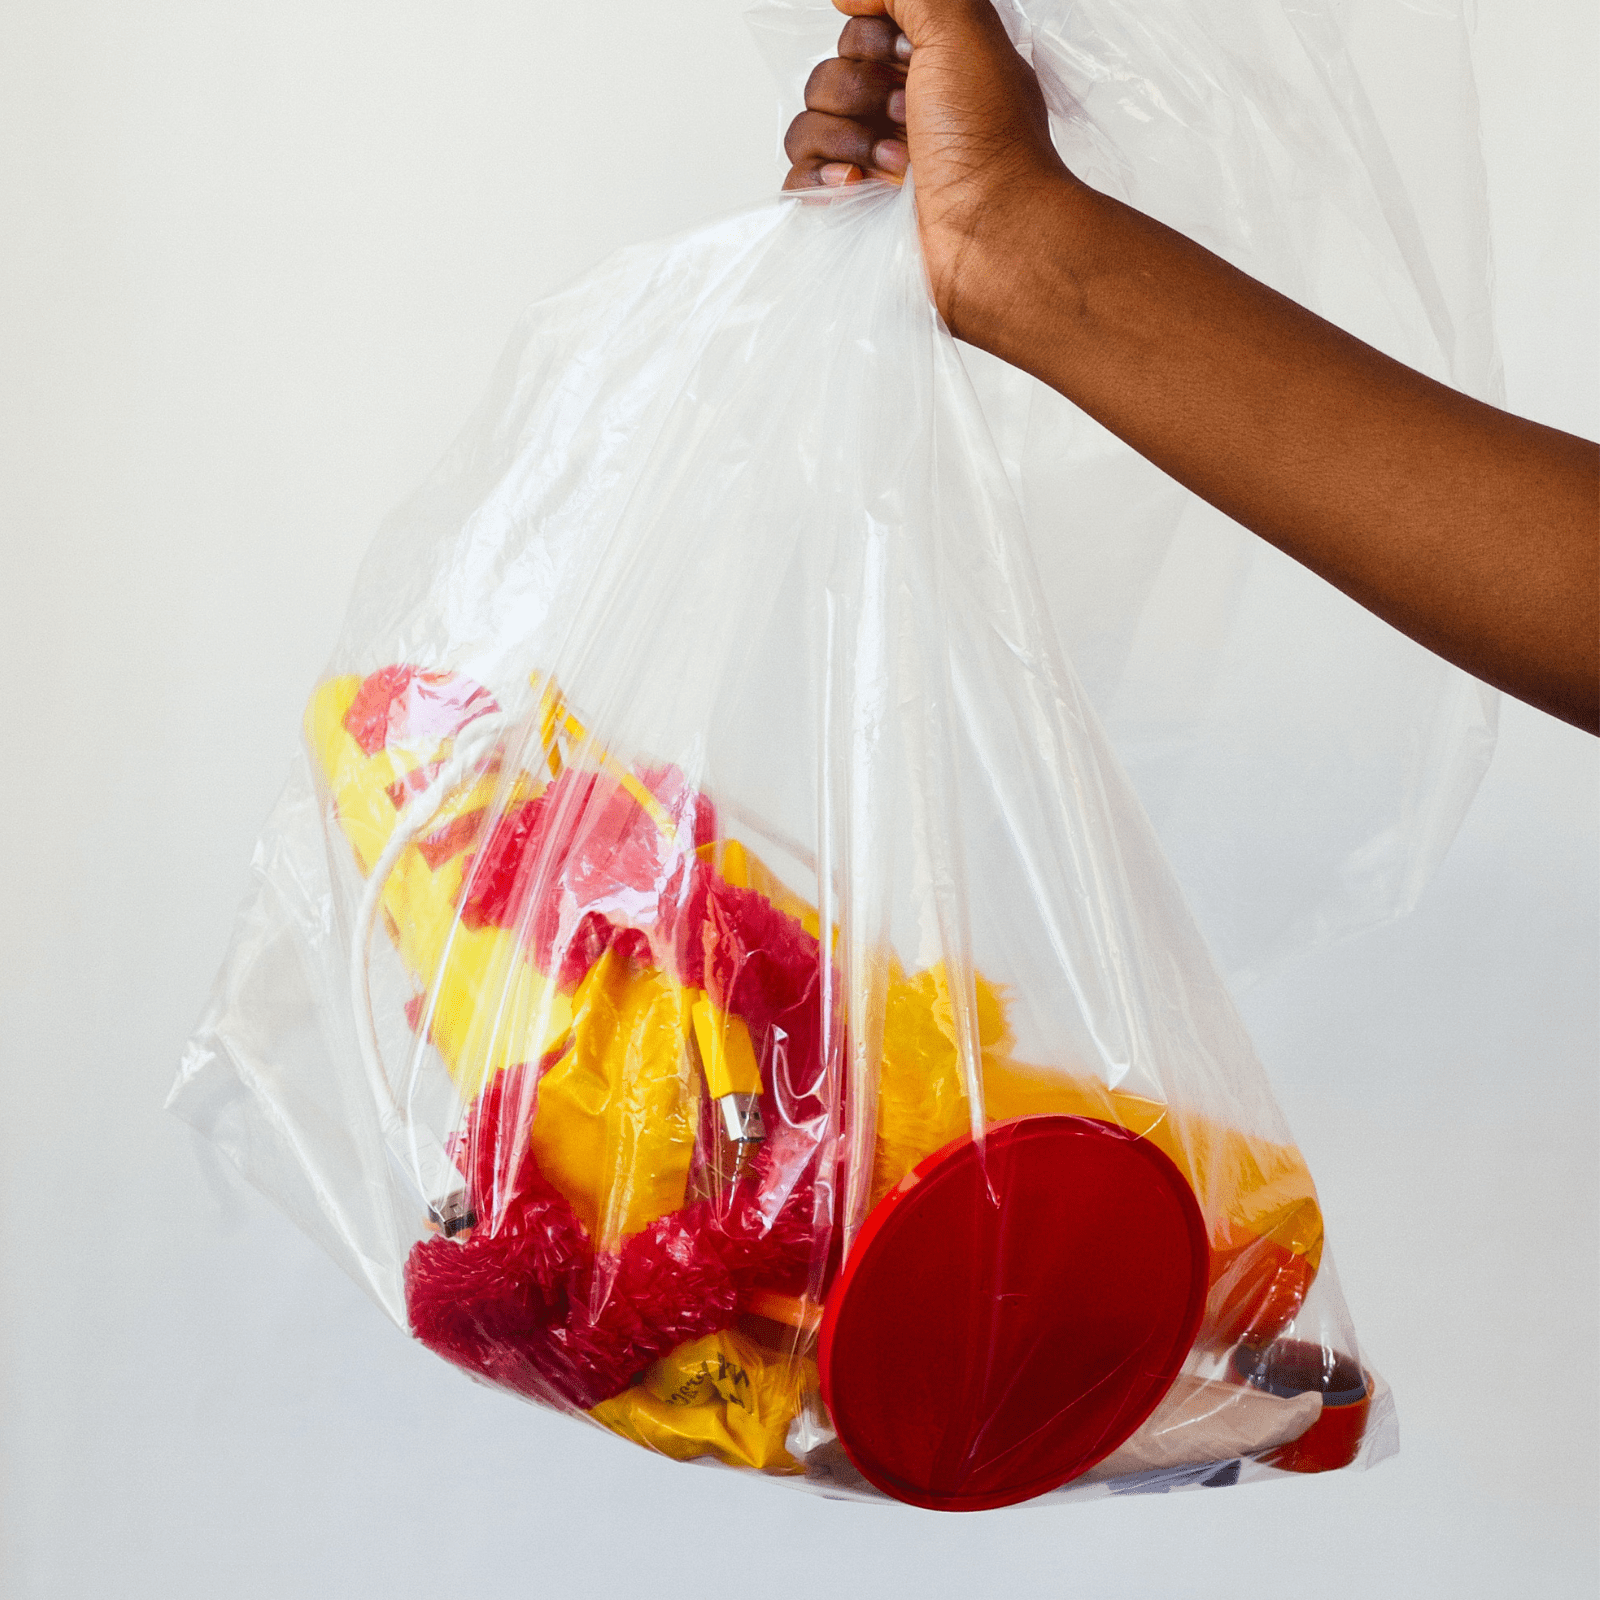 Premium All-Purpose Trash Bag Bundle - 4 Boxes, 4 Sizes, 2 Styles – Blazer  Brand